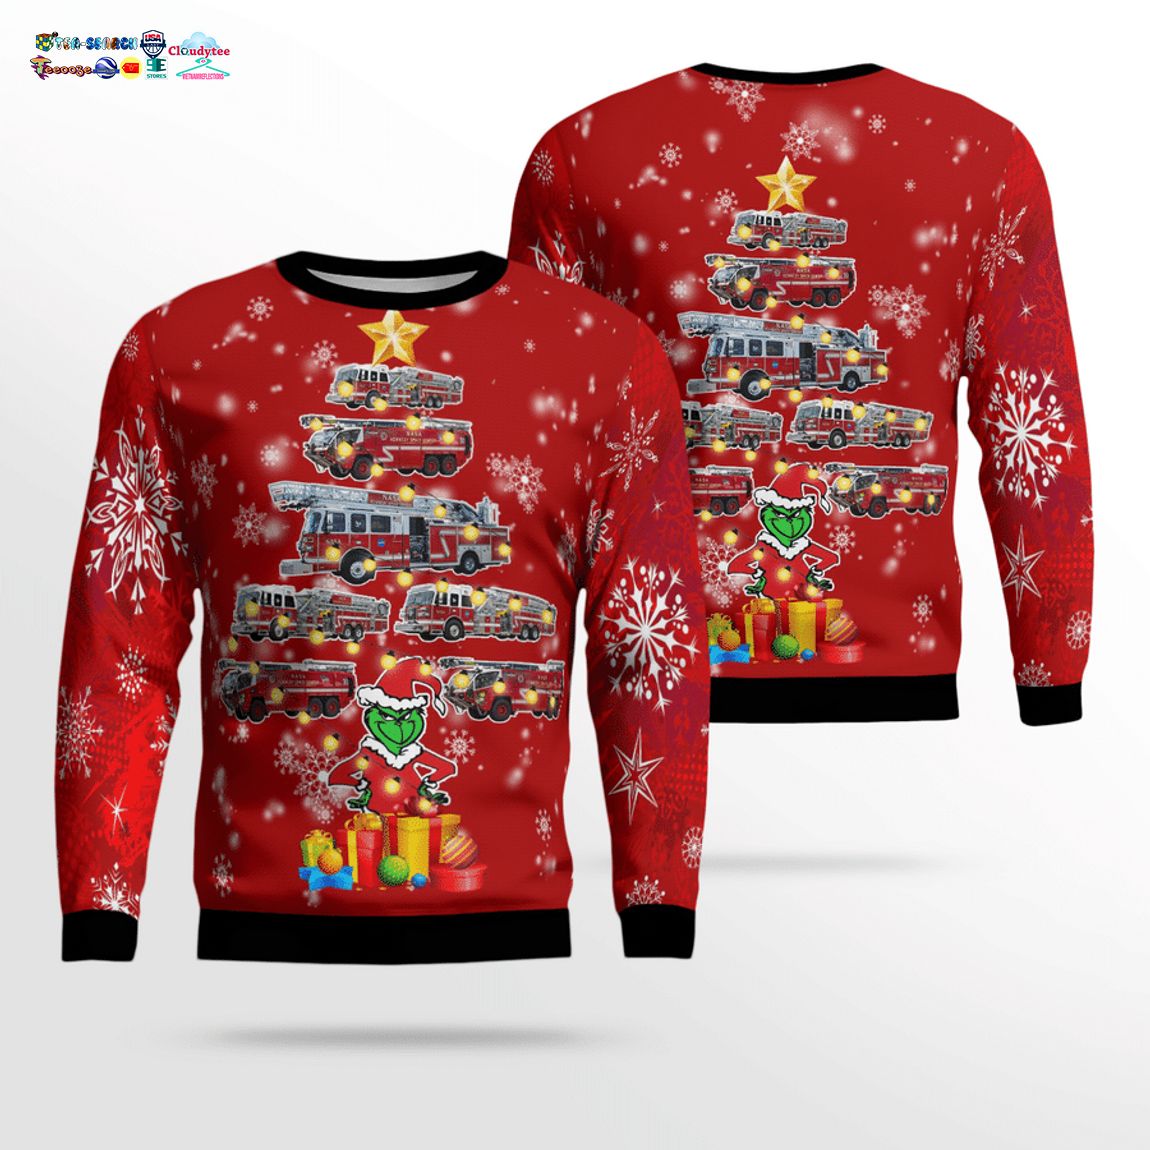 grinch-florida-nasa-kennedy-space-center-fire-rescue-3d-christmas-sweater-1-WLQKK.jpg